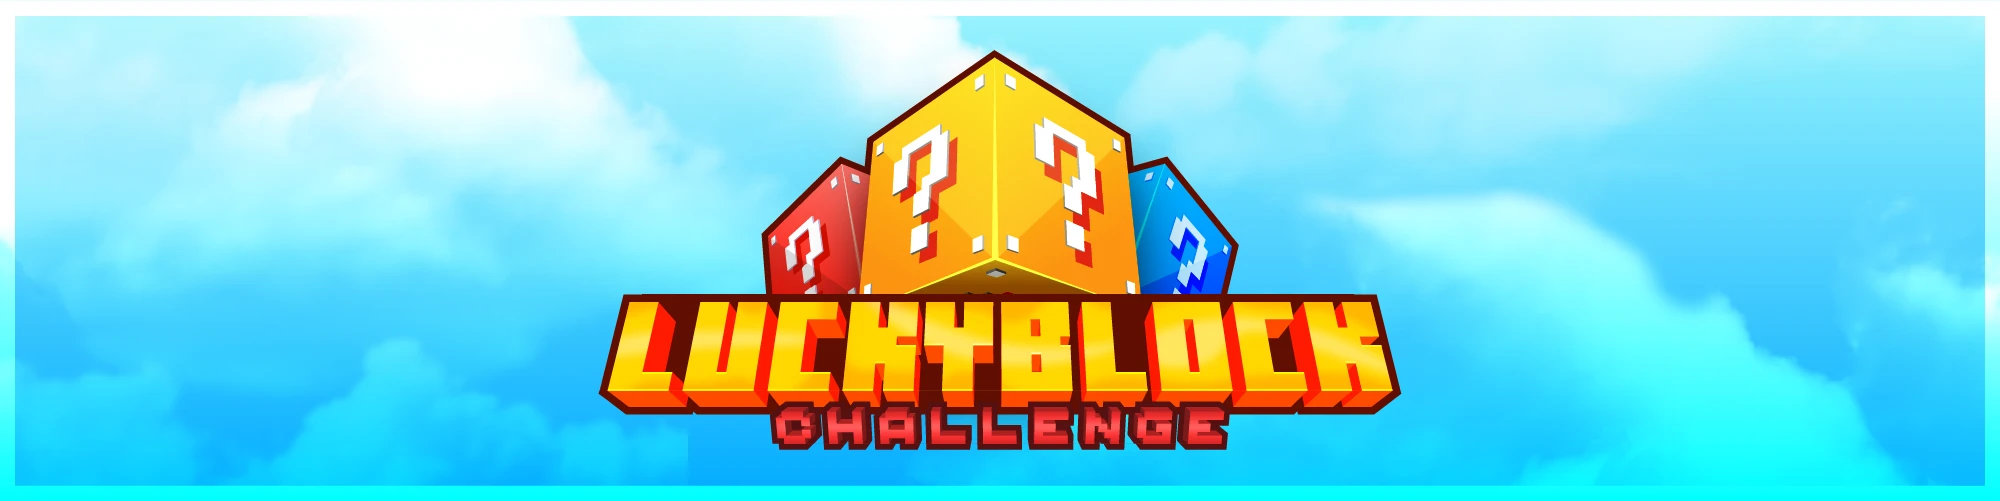 Lucky Block - Minecraft Mods - CurseForge